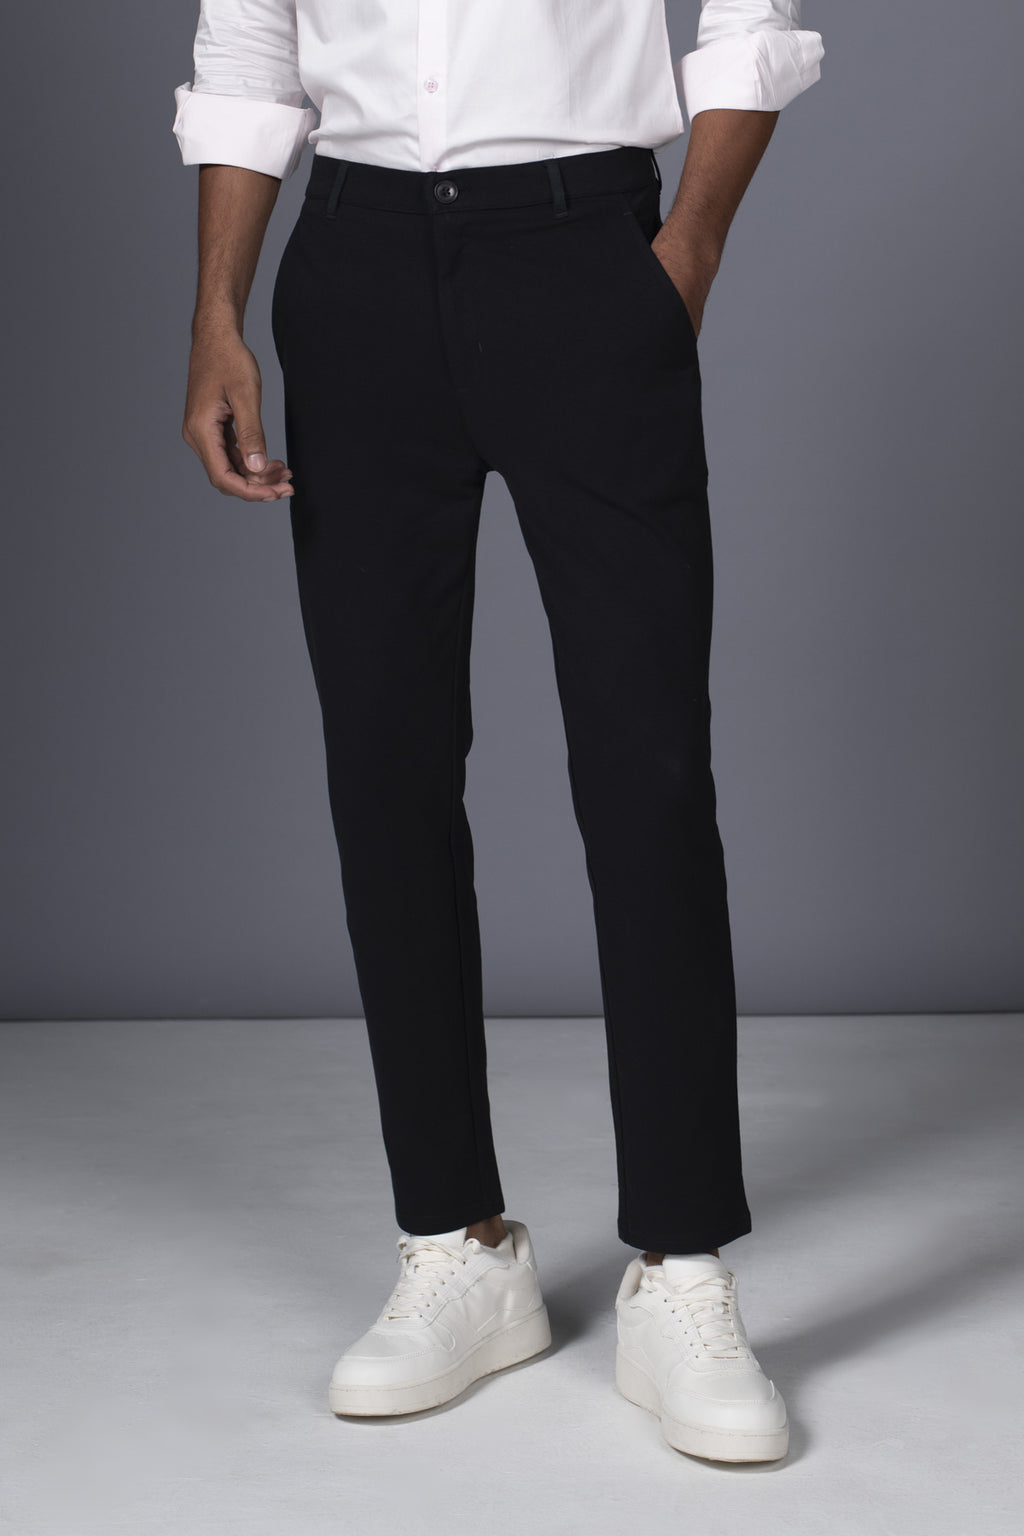 Men's Smart Black Trousers | M&S